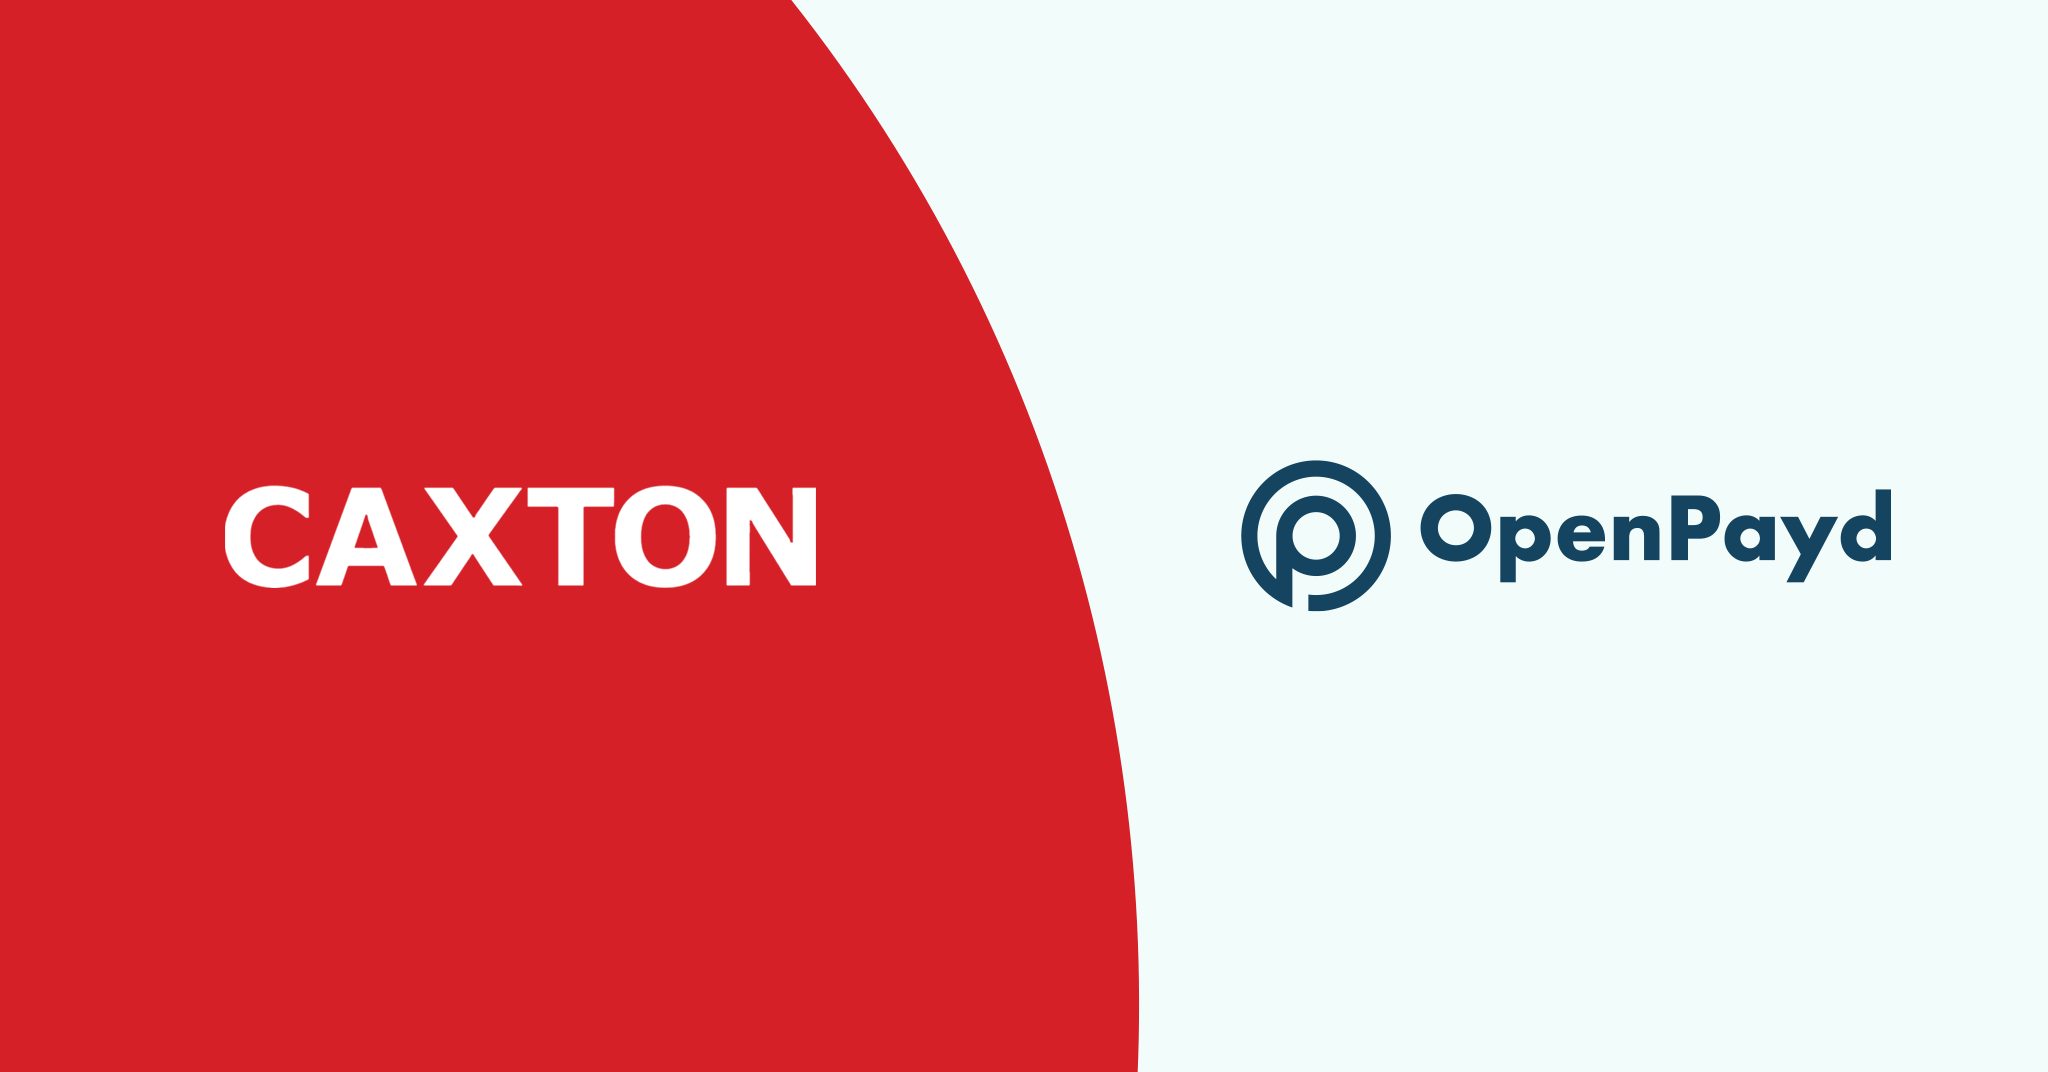 Caxton and OpenPayd's major partnership